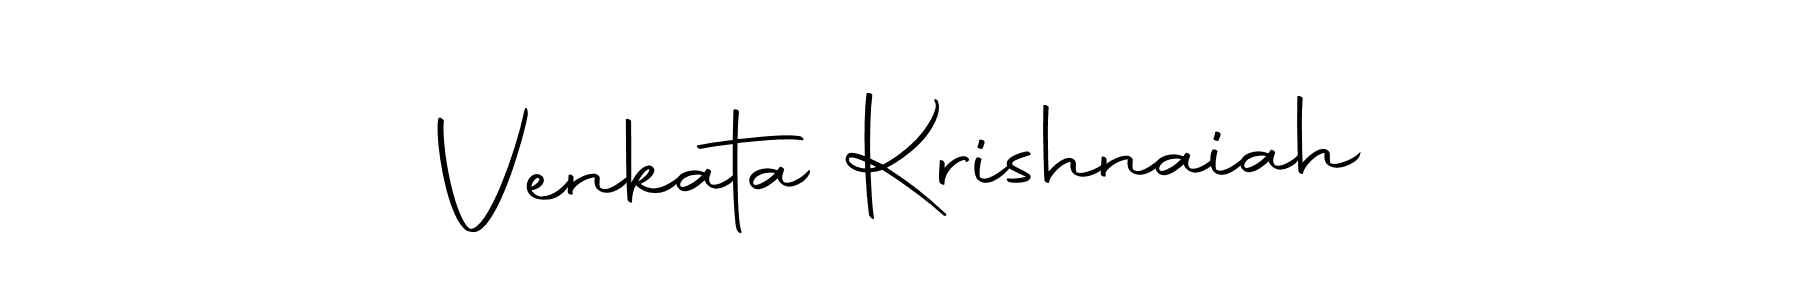 Make a beautiful signature design for name Venkata Krishnaiah. Use this online signature maker to create a handwritten signature for free. Venkata Krishnaiah signature style 10 images and pictures png